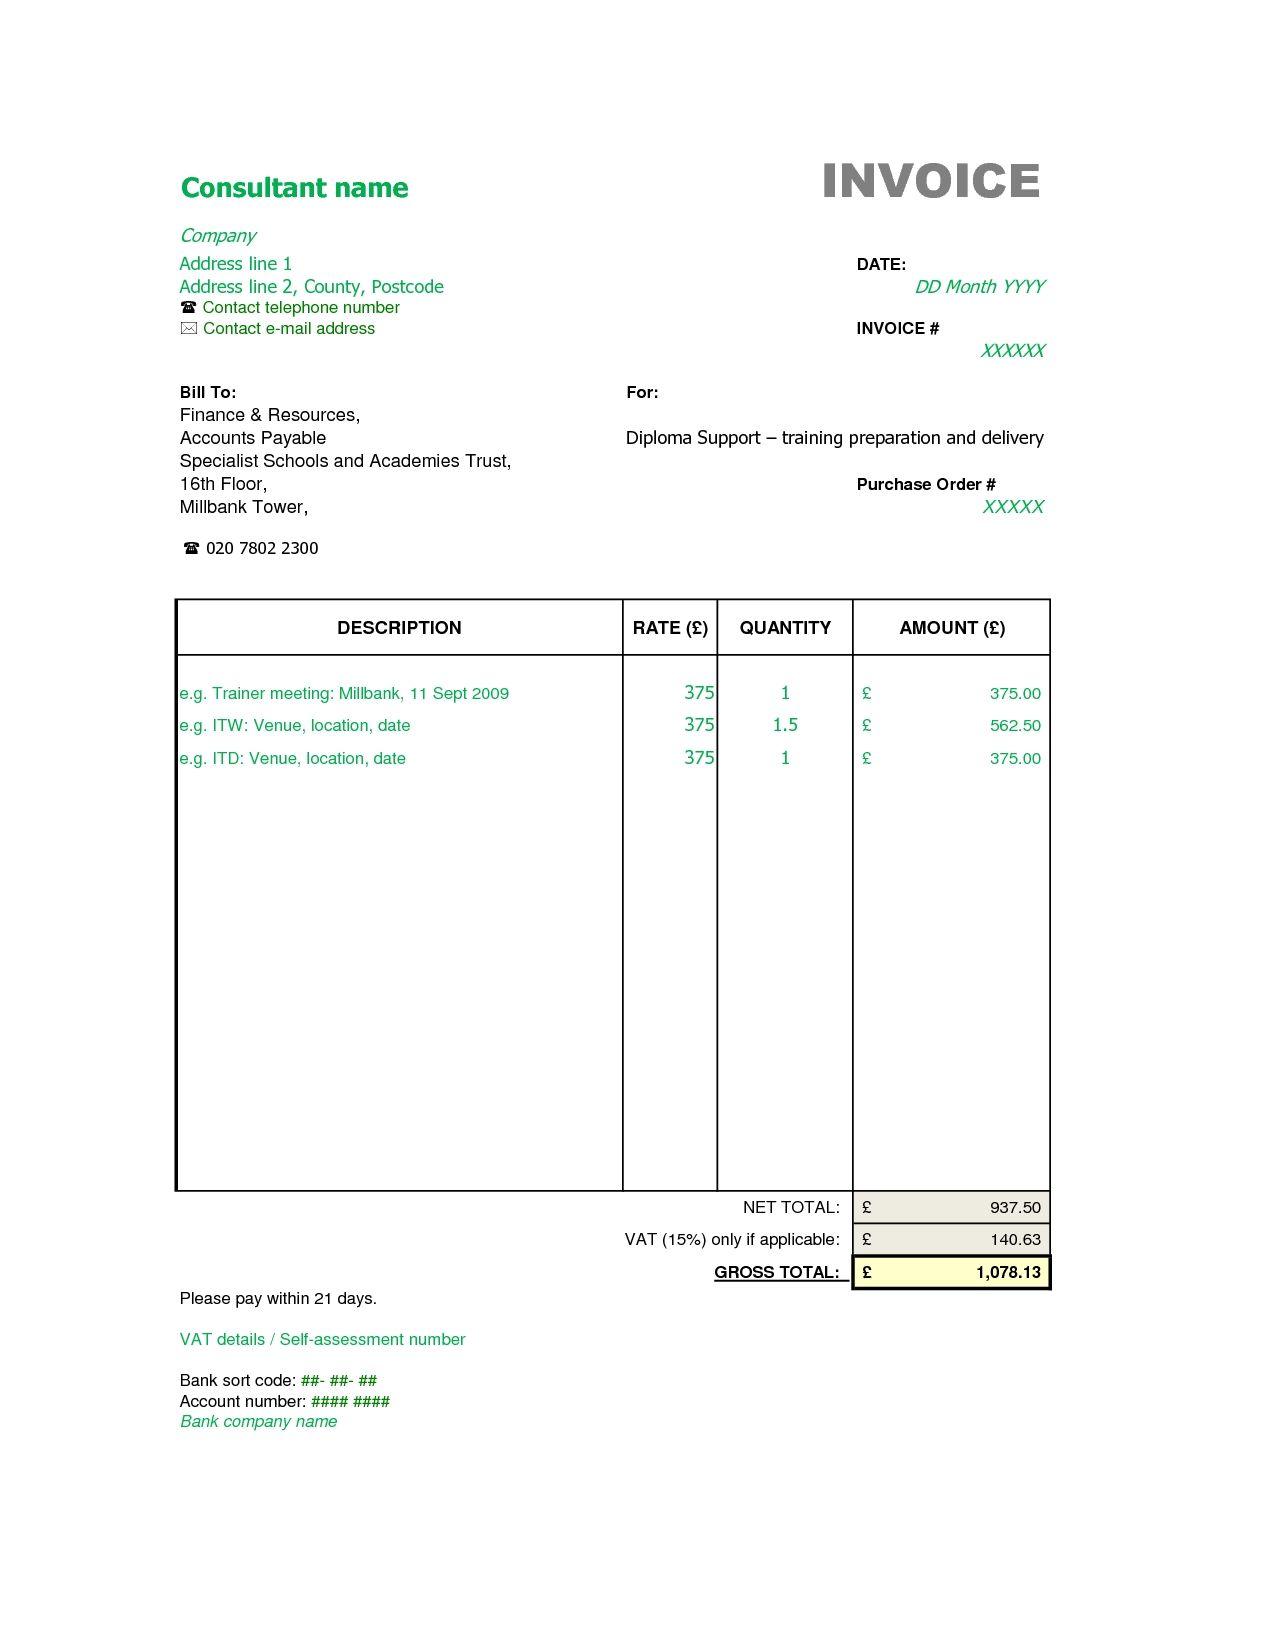 Sample Invoice Format Invoice Template For Mac bondheavy